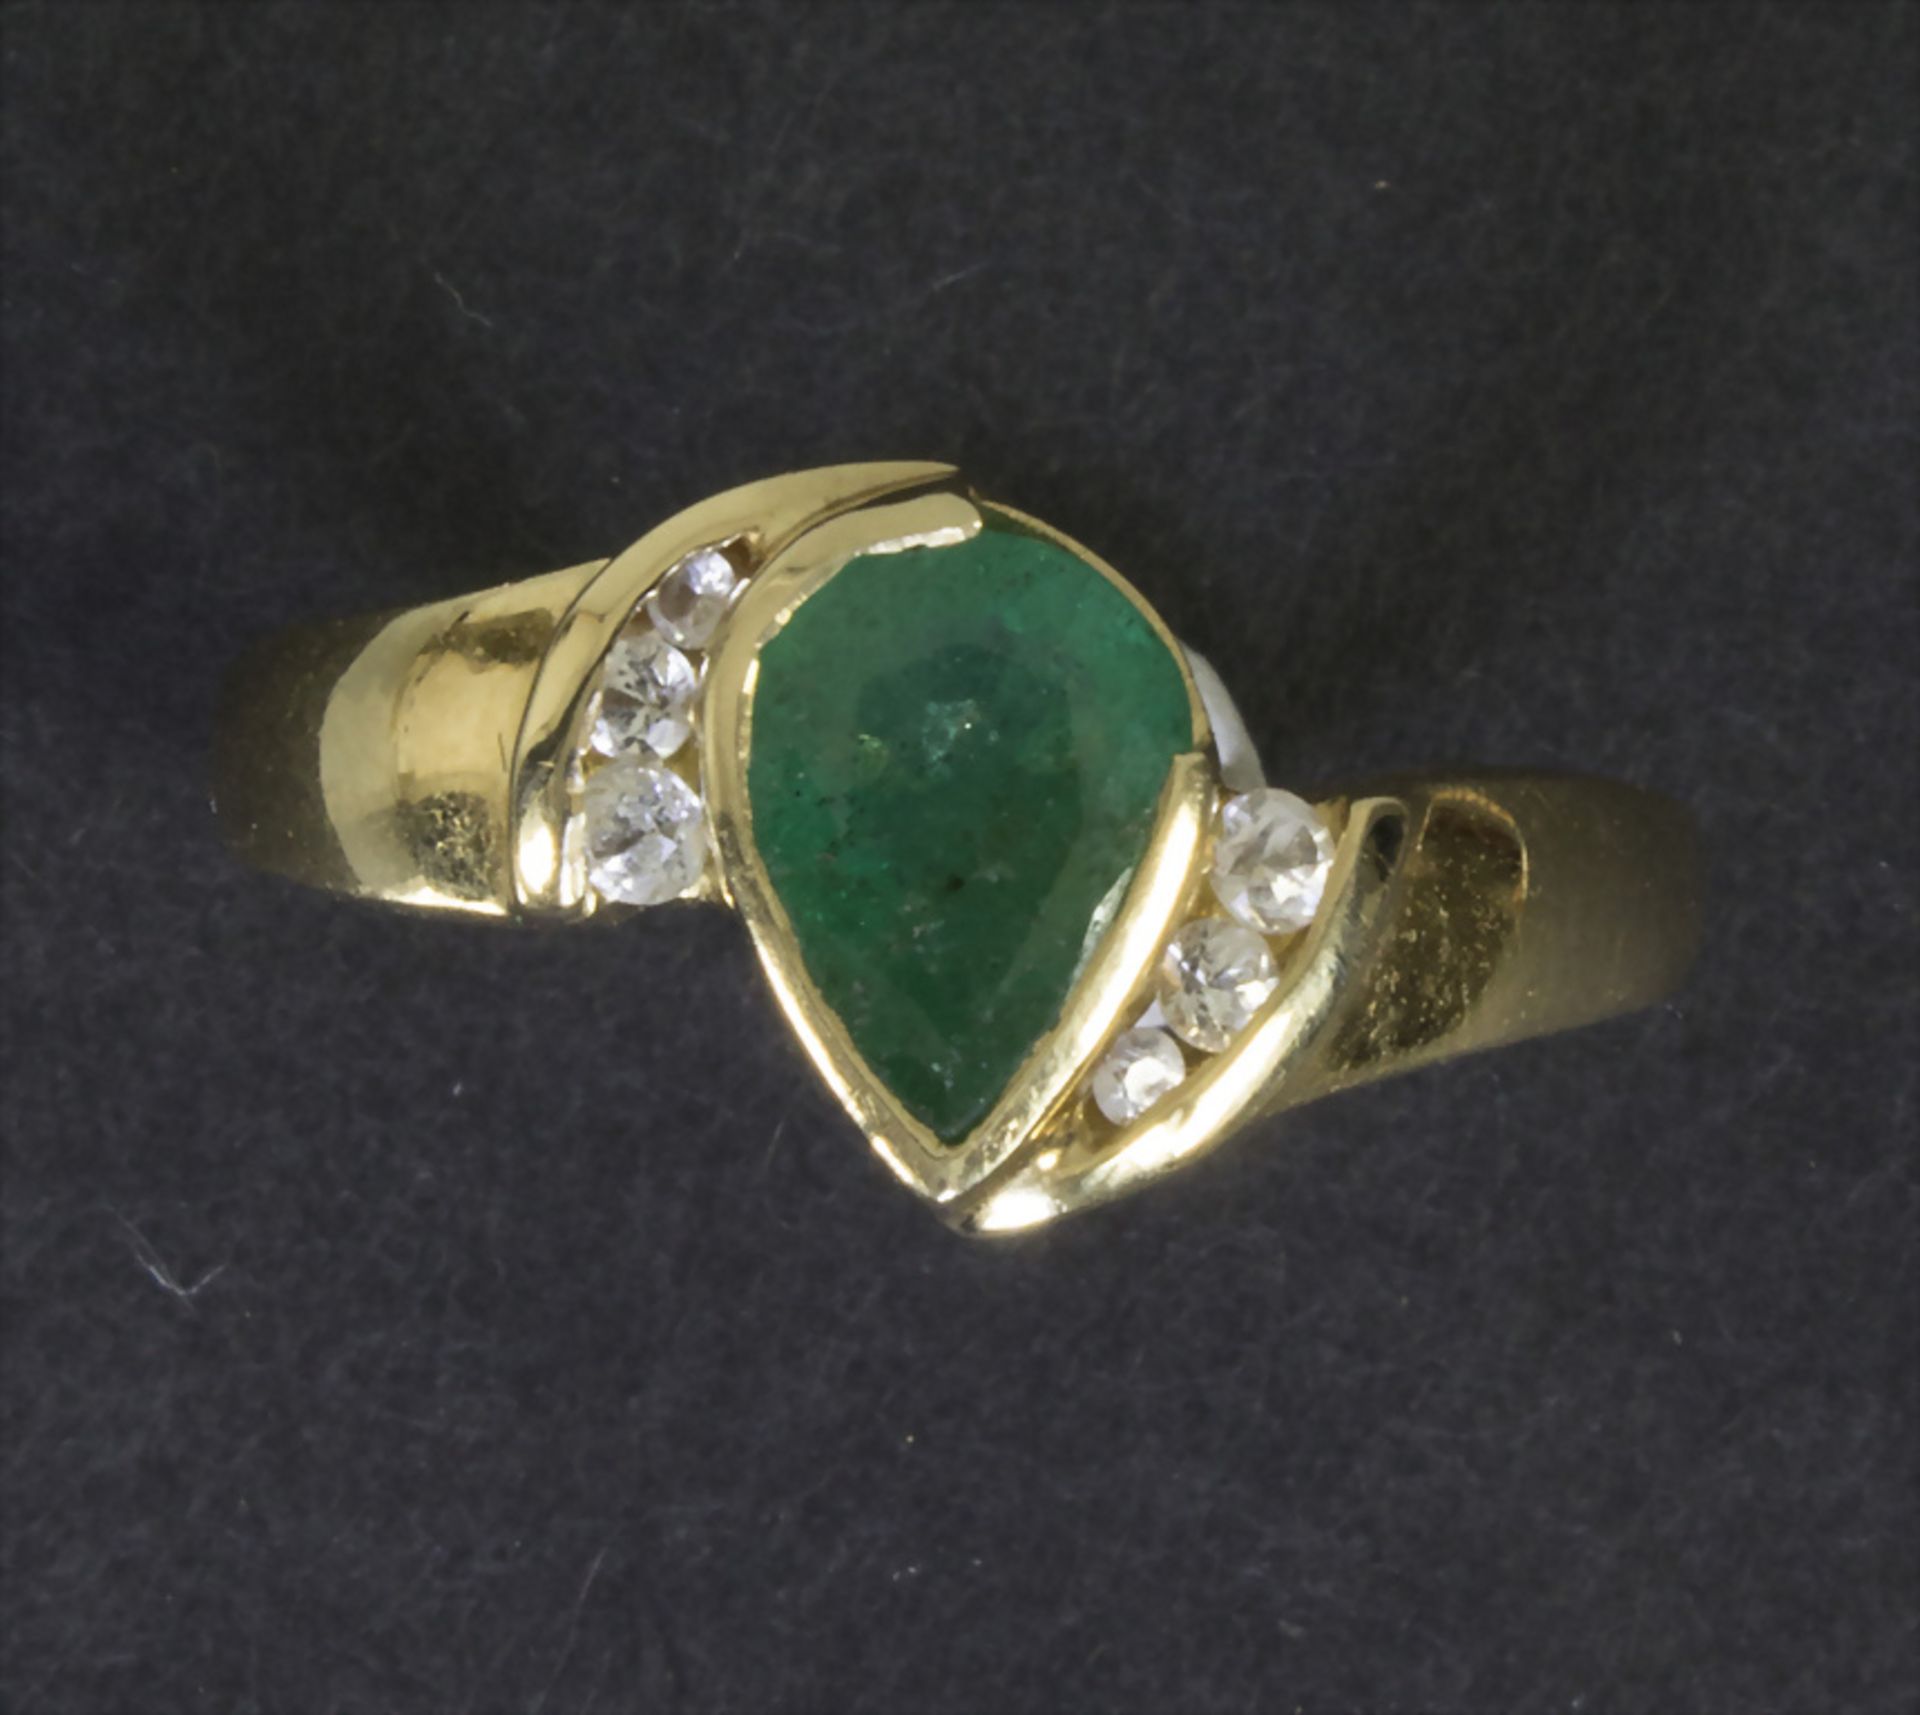 Damenring mit Smaragd und Diamanten / A ladies 14k gold ring with emerald and diamonds, 20. Jh.